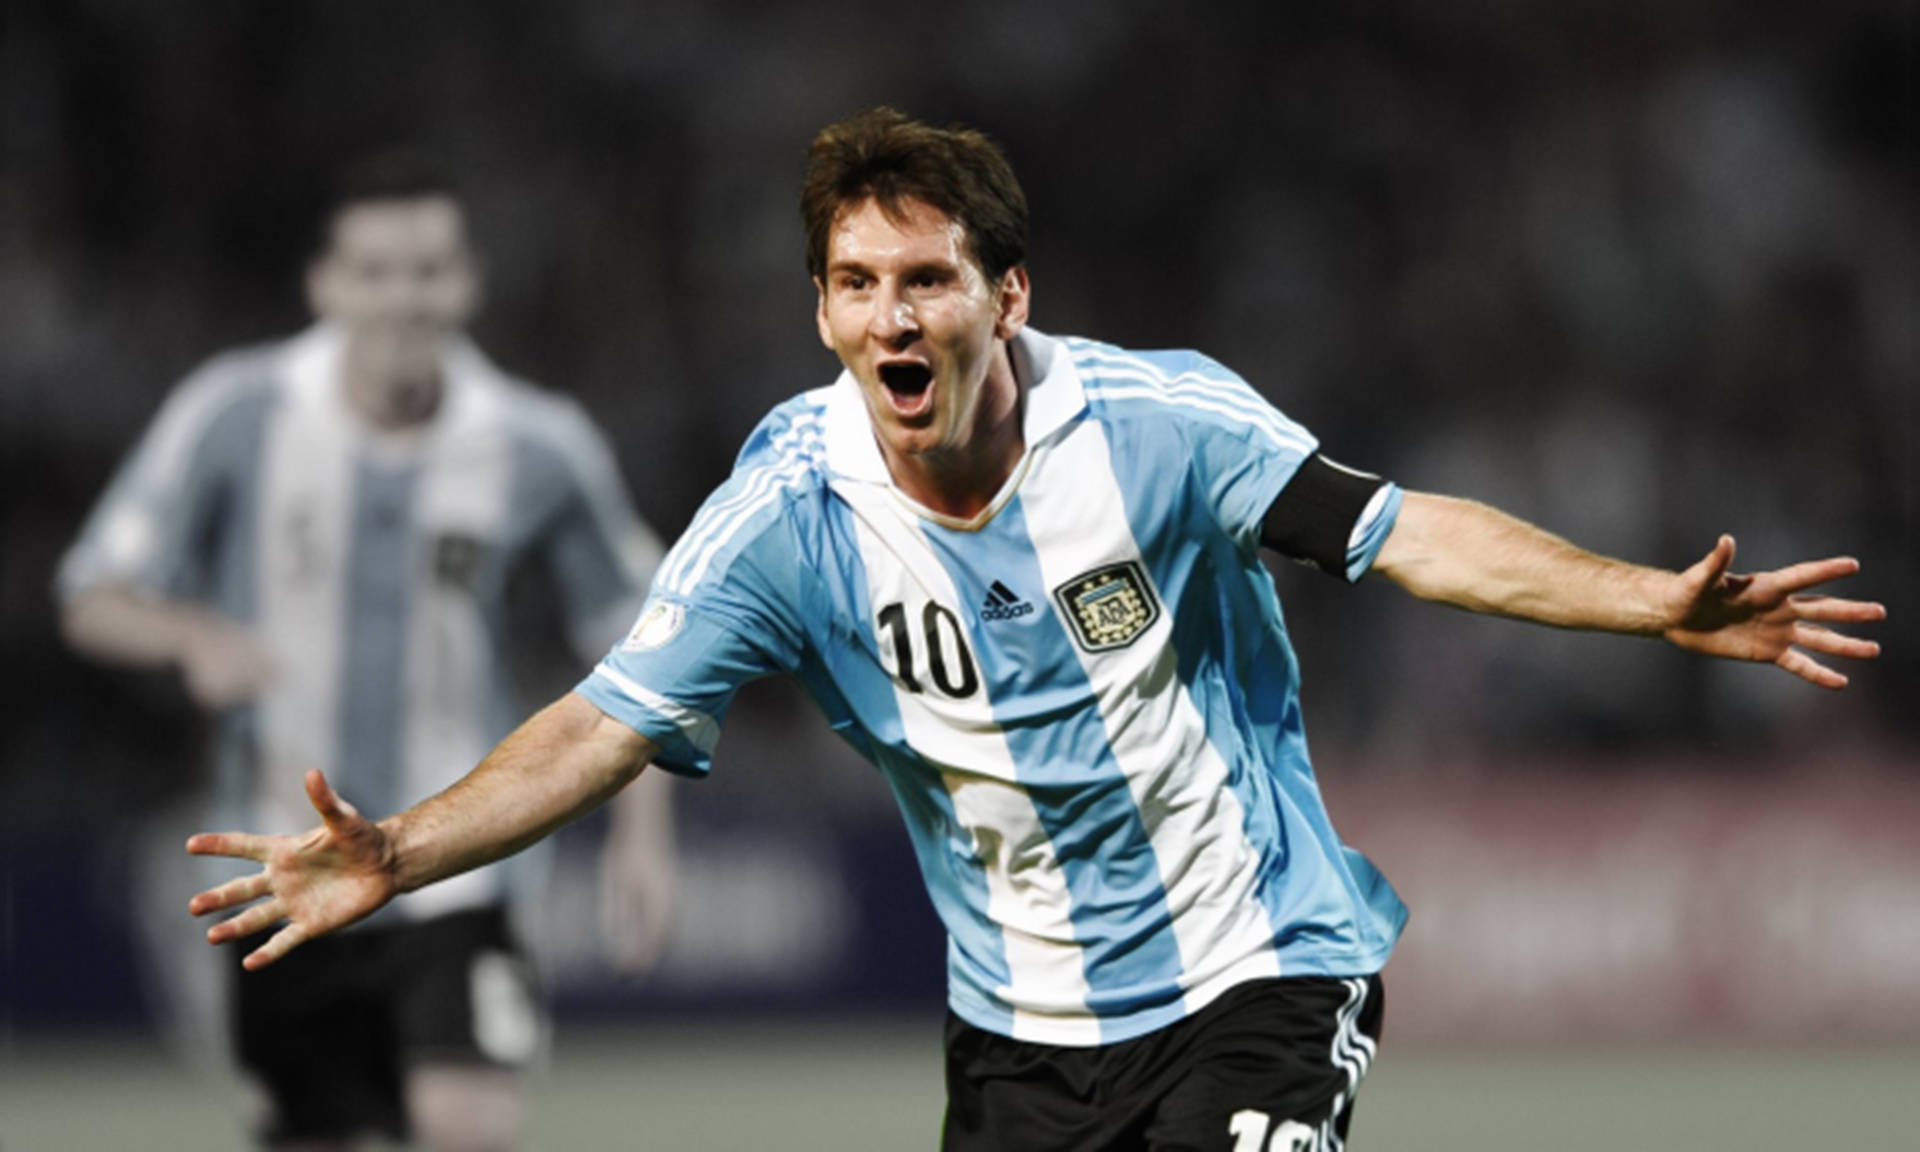 Free Messi Argentina Wallpaper Downloads, [100+] Messi Argentina Wallpapers  for FREE 